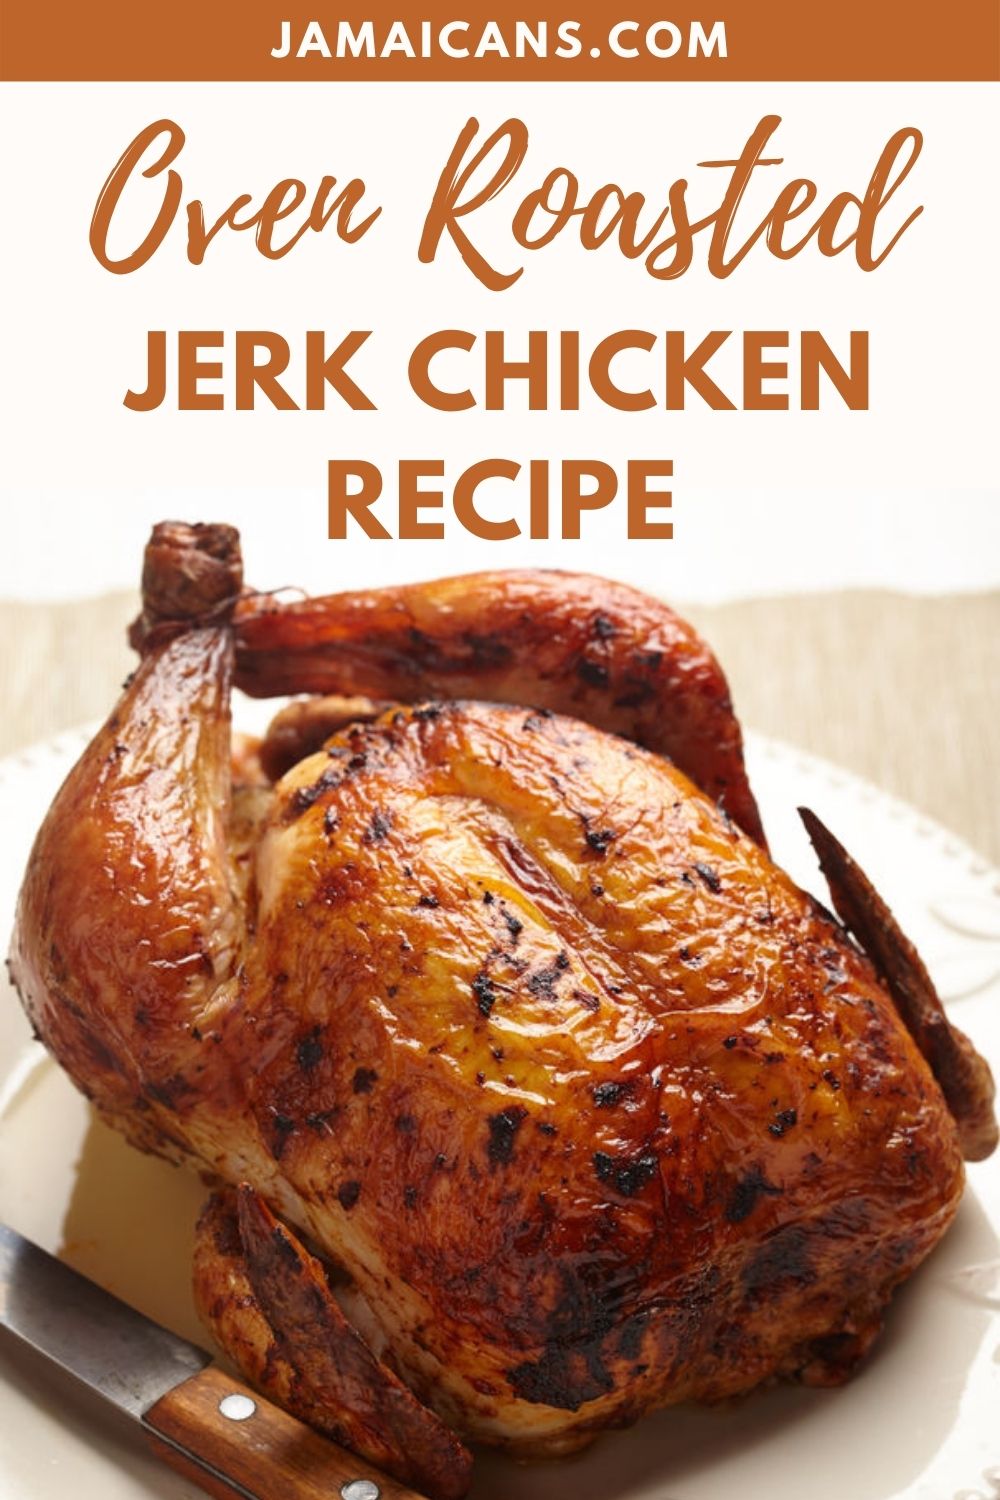 Oven Roasted Jerk Chicken Recipe - Jamaicans.com